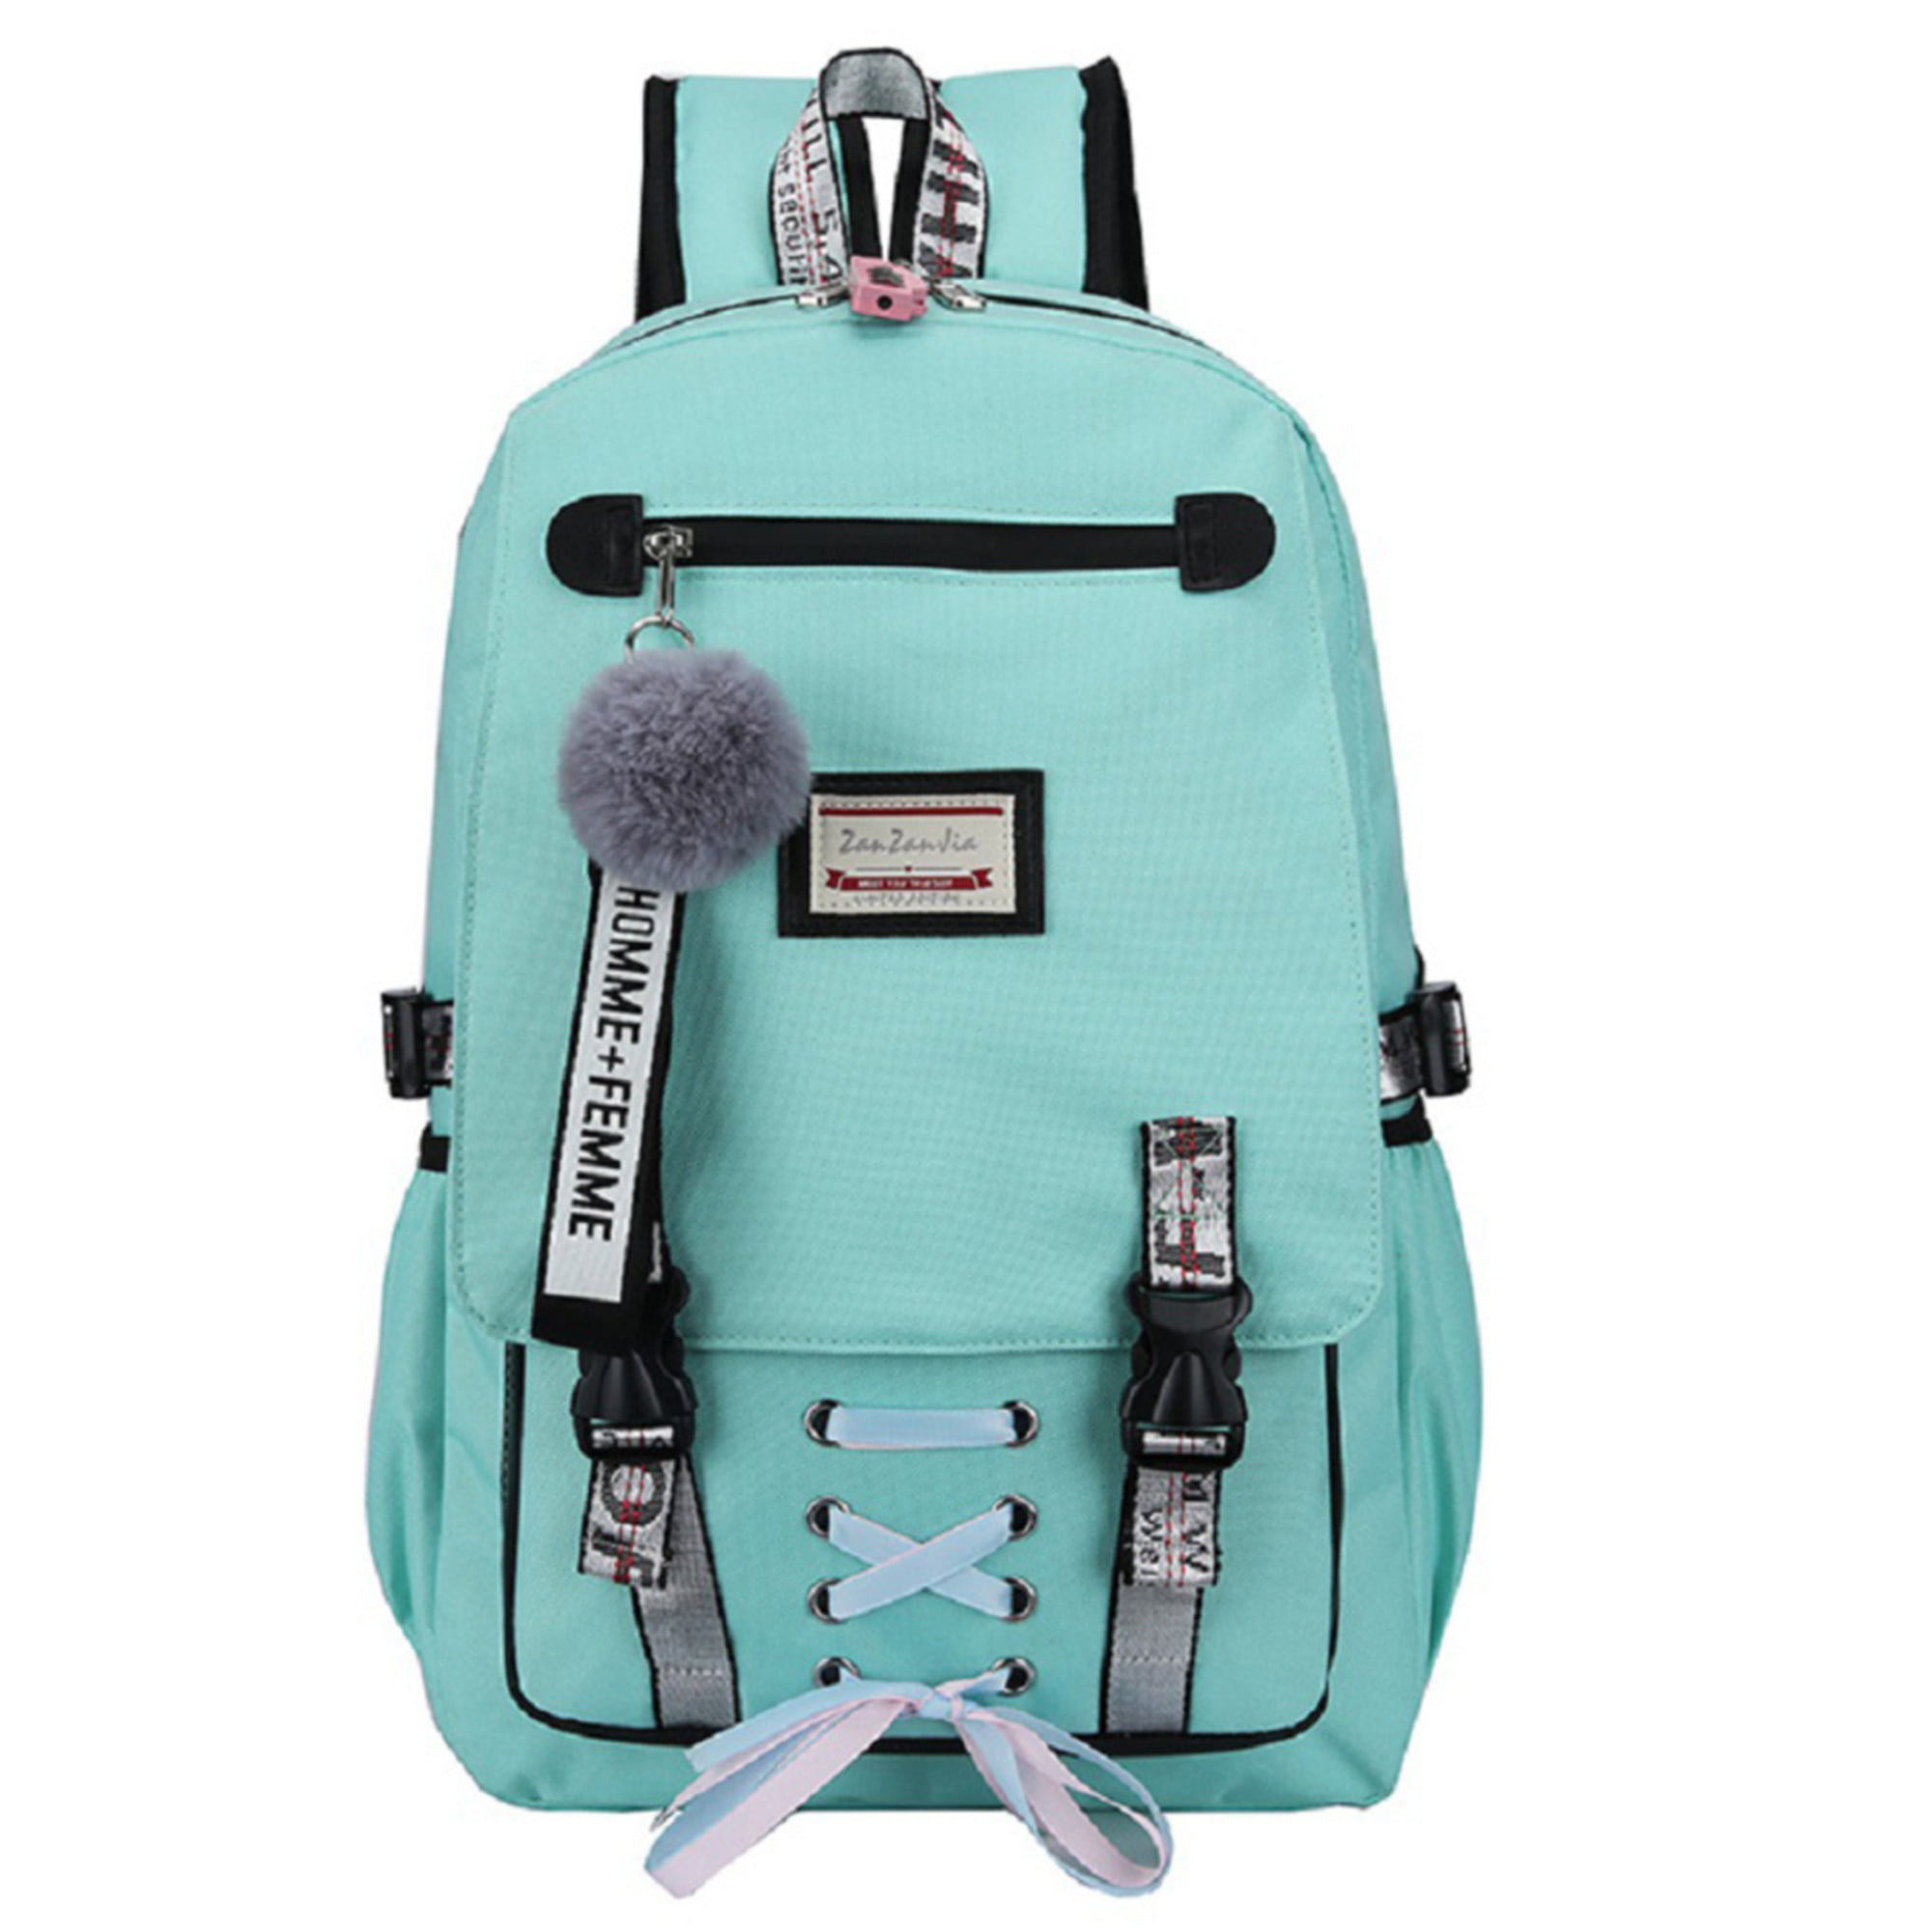 New YearS Plaid Laptop Backpack Shoulder Rucksack Bag for Womens Mens Teen Girls 17